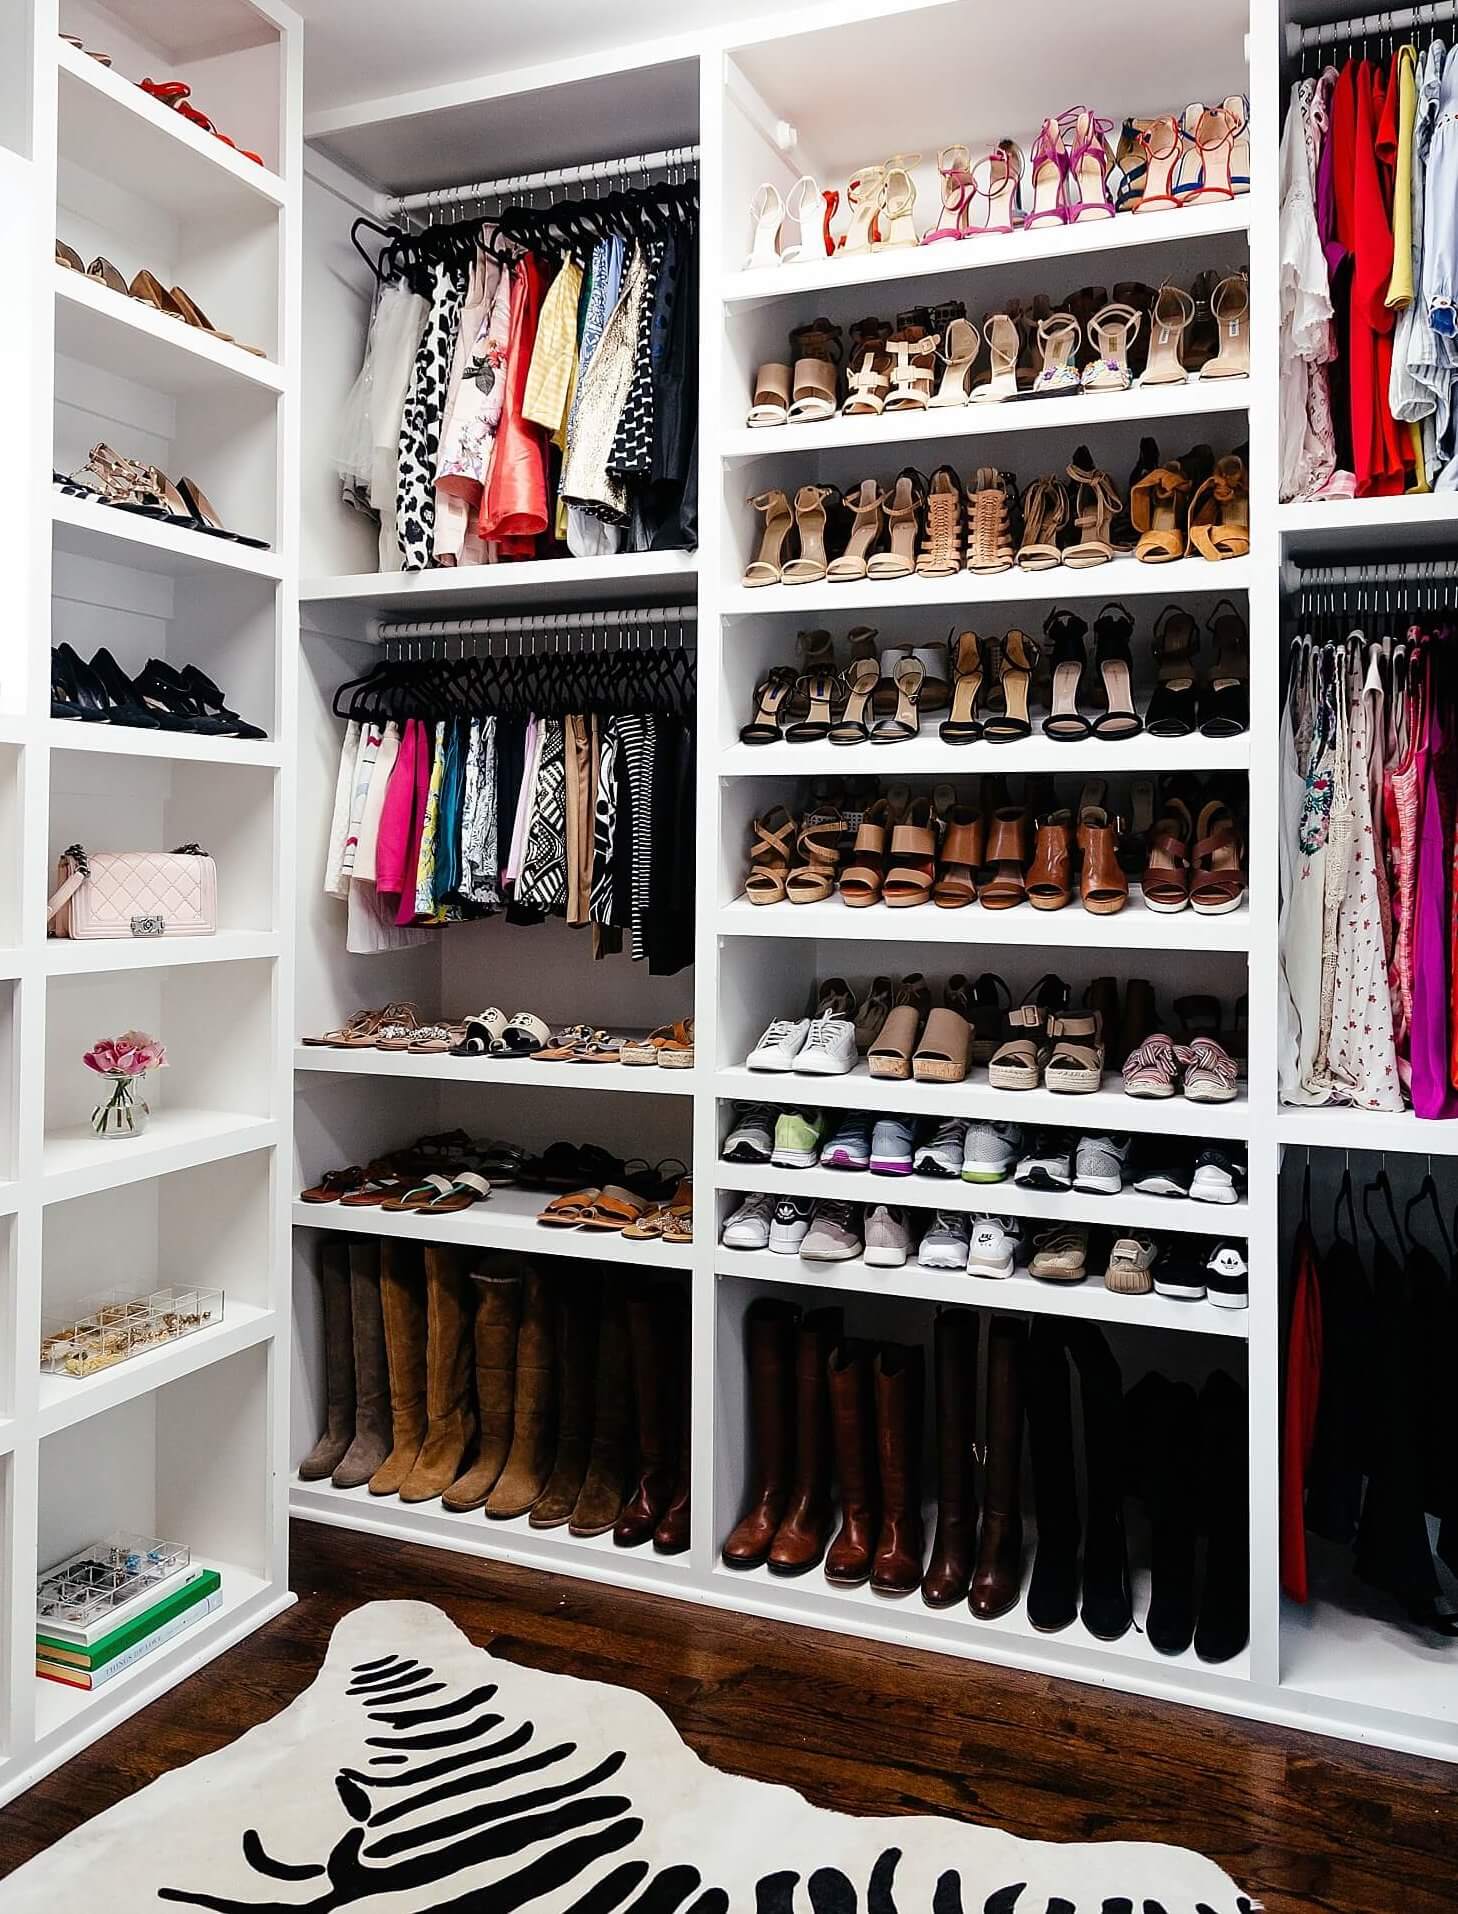 brighton keller new home closet reveal shoe organization